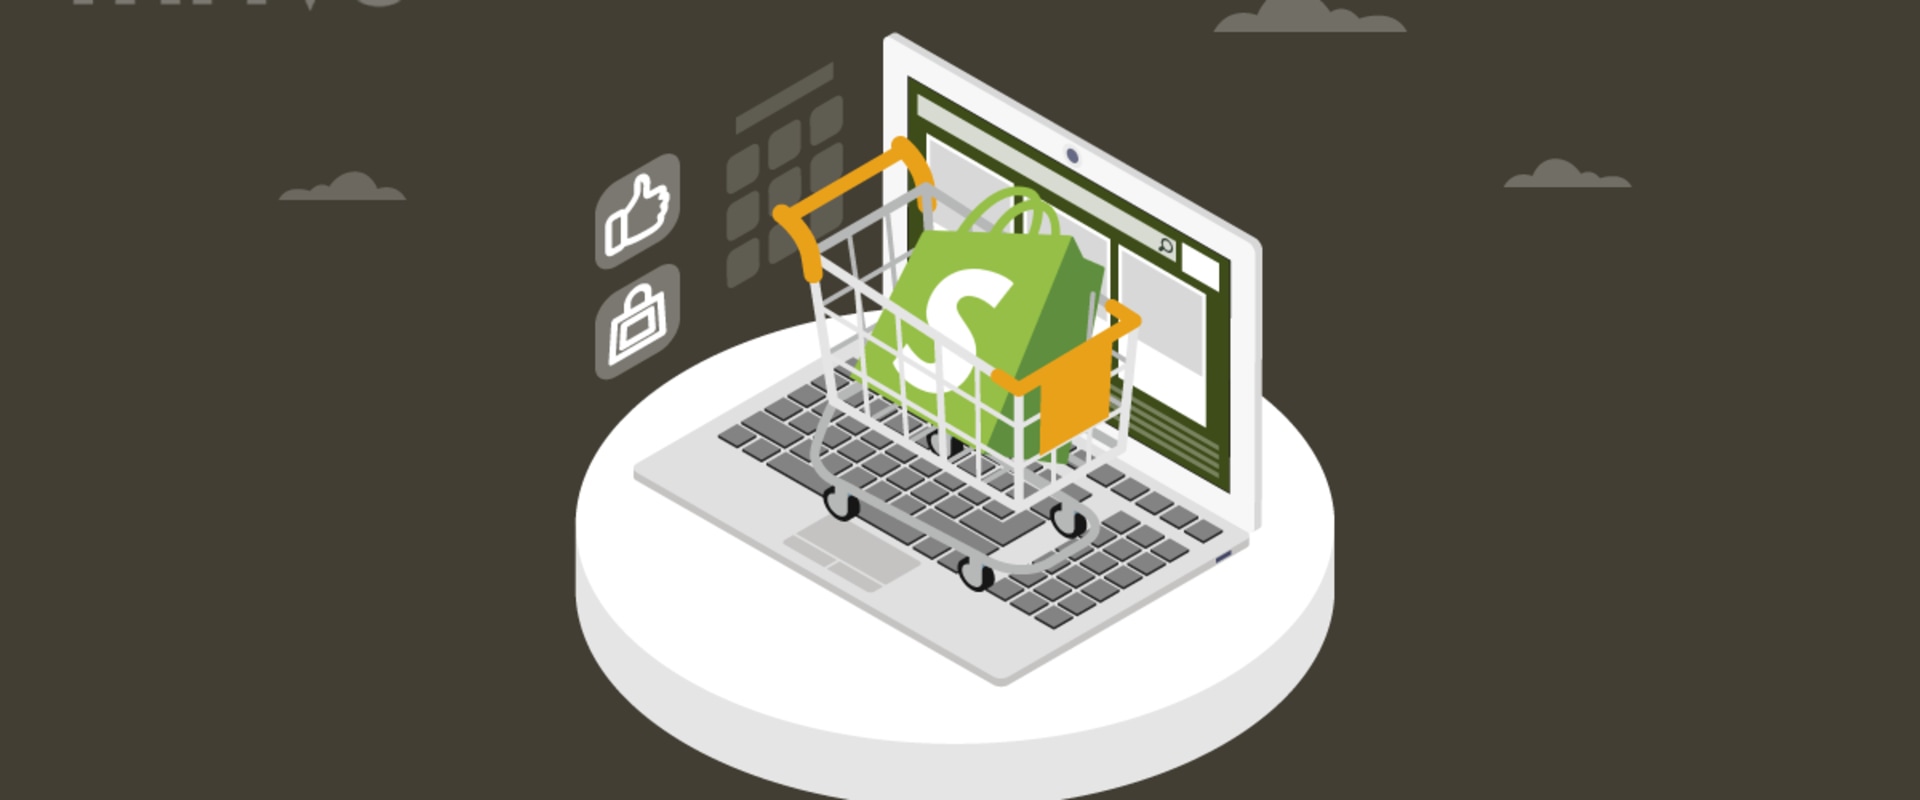 How Shopify Achieves Profitability